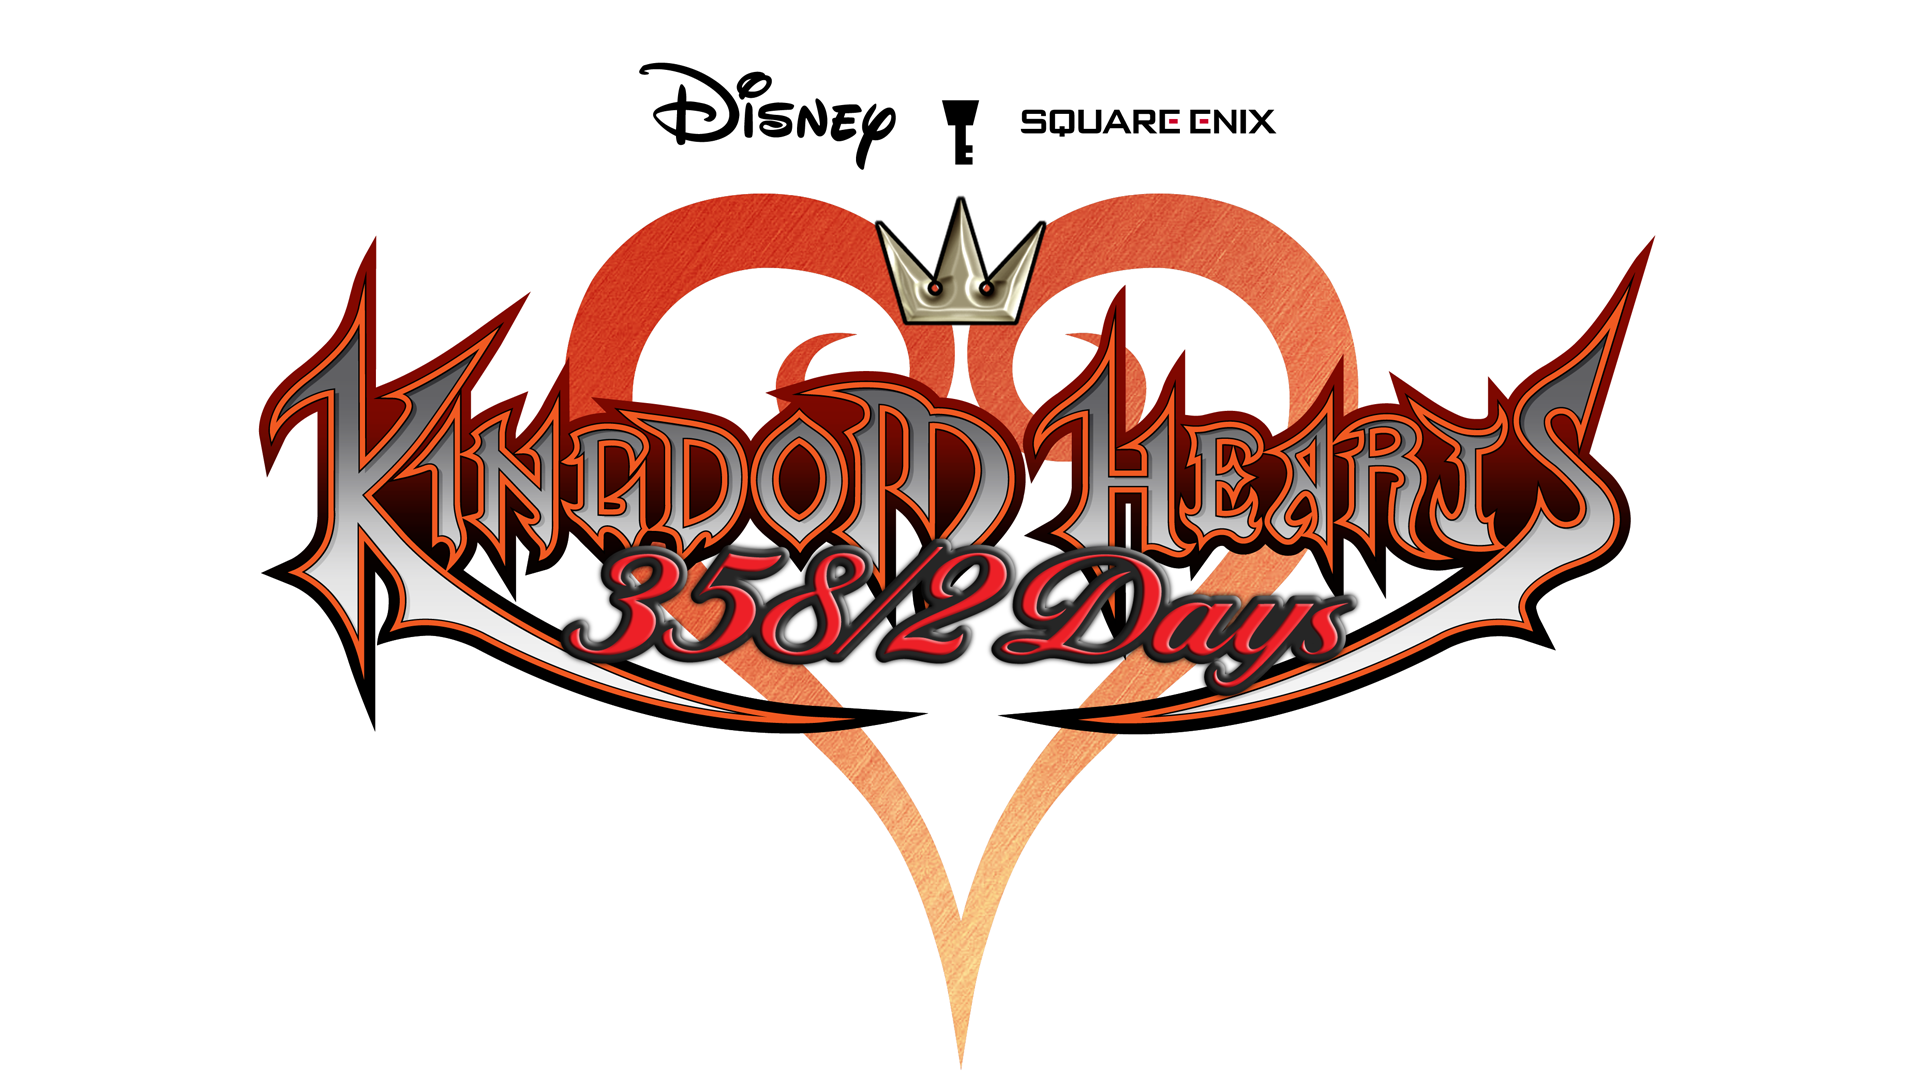 Kingdom Hearts: 358/2 Days Logo